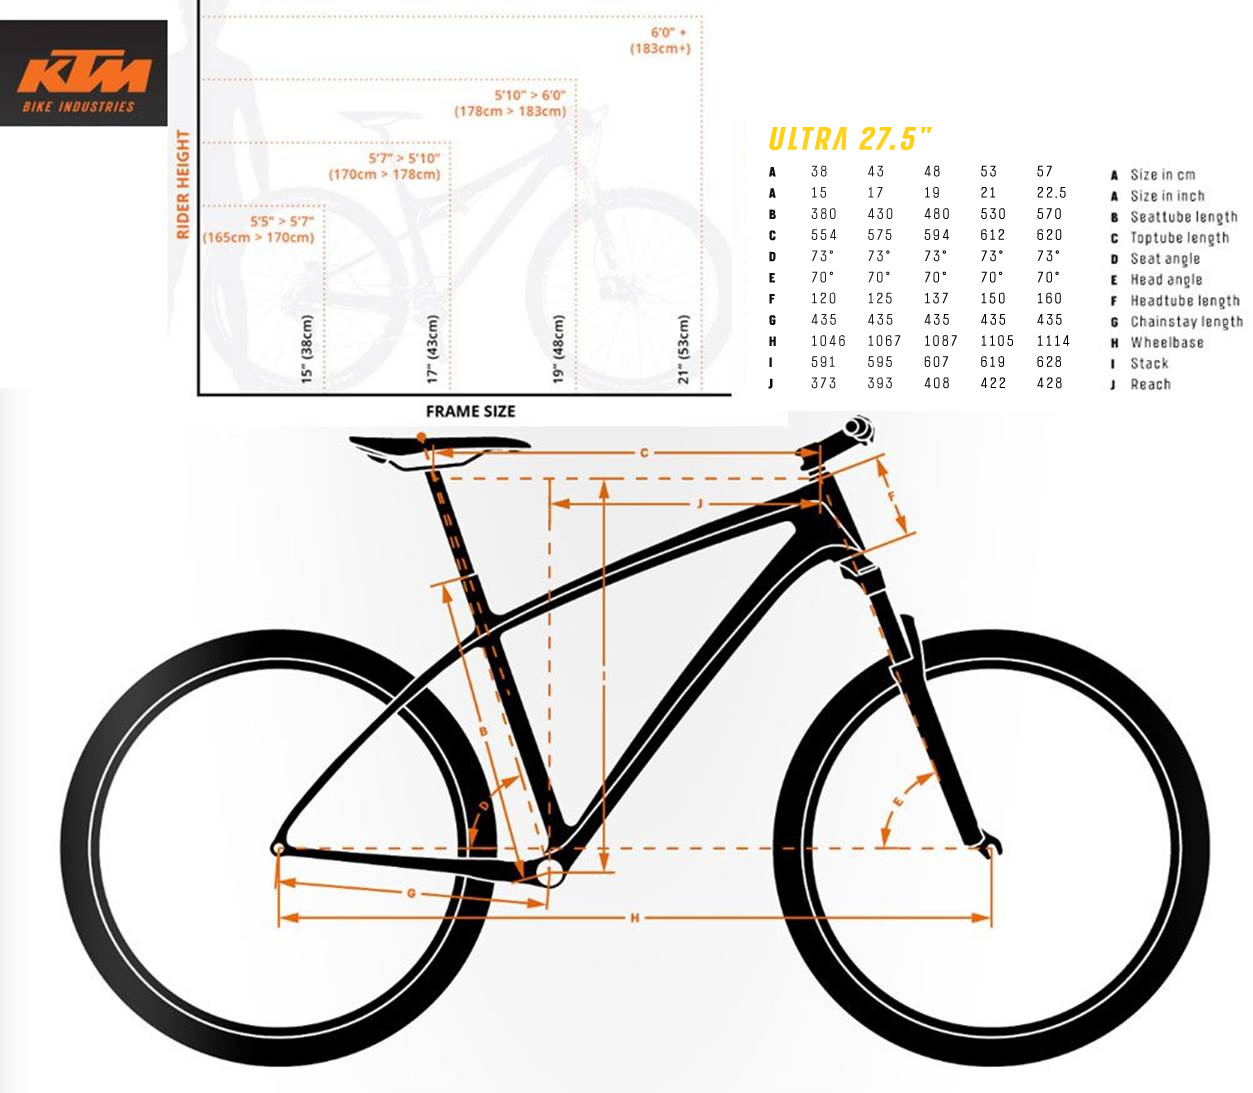 Горный велосипед рама 24. Wind Boxer Sport Bike велосипед размер рамы. Размер рамы KTM. Размер рамы велосипеда КТМ Scarp 2021. Велосипед Vol cono 6850 frame Size 16.